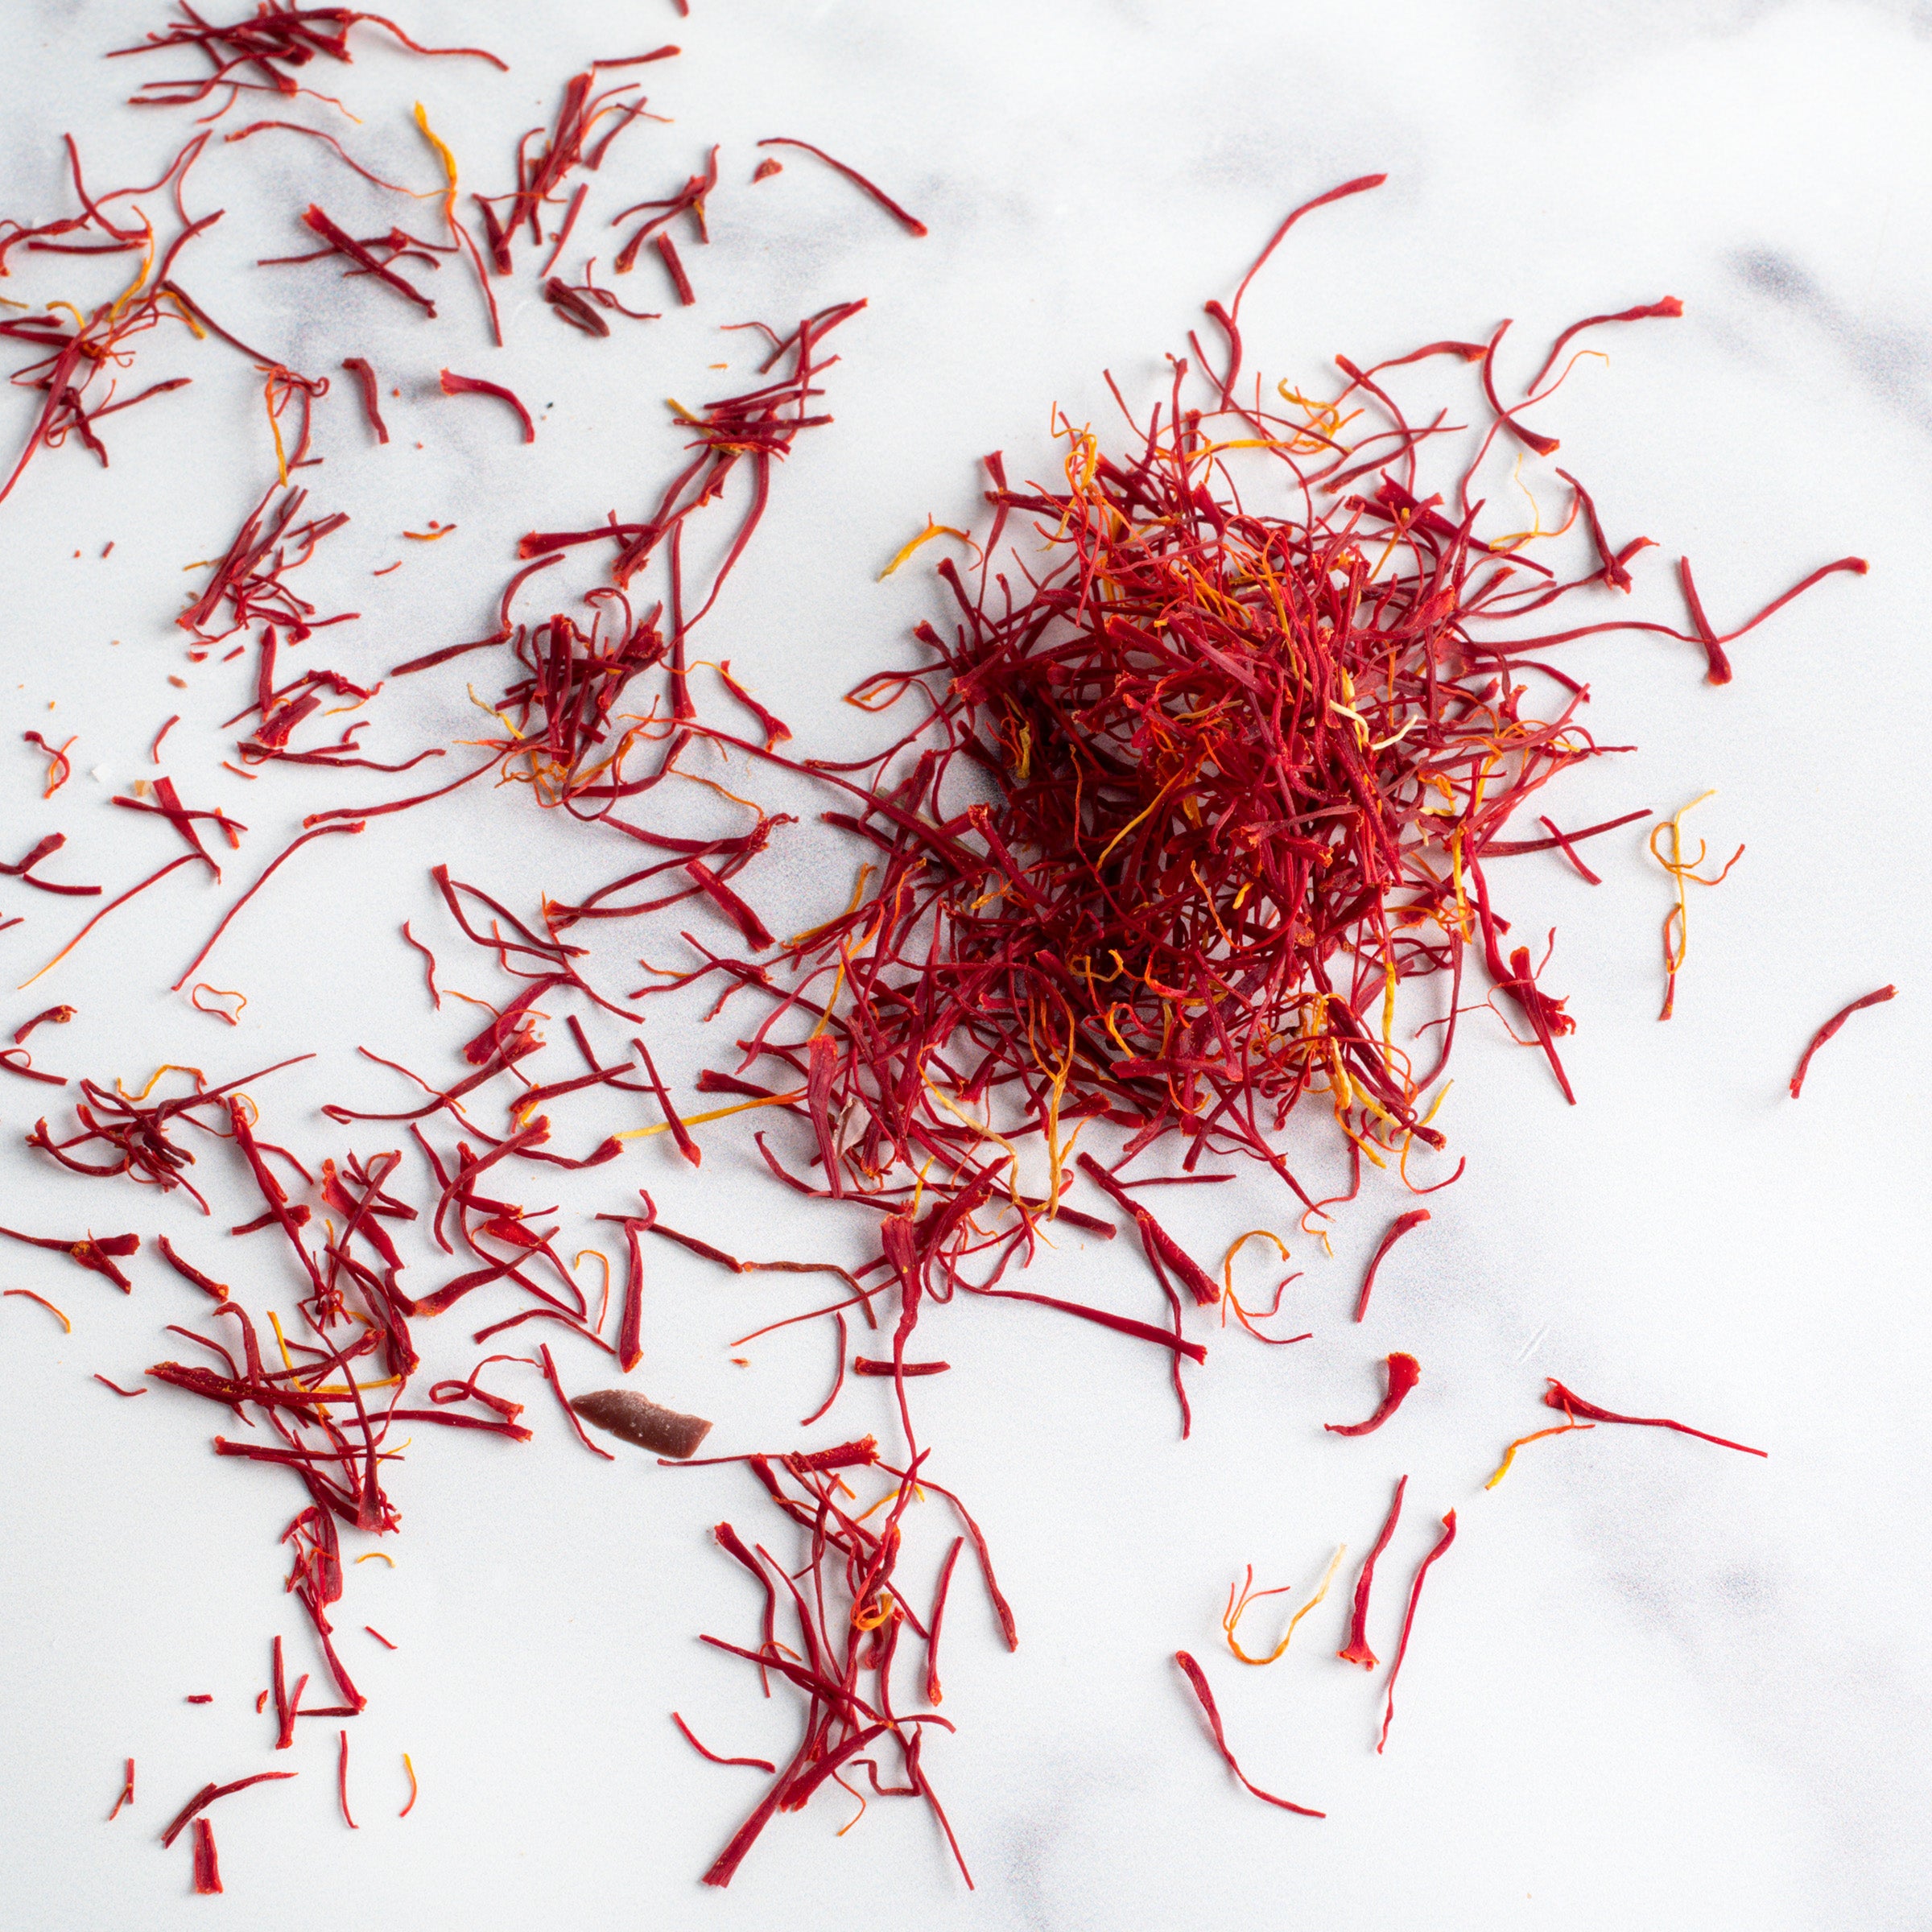 Spanish Saffron Tin - Safrante - Rubs, Spices & Seasonings